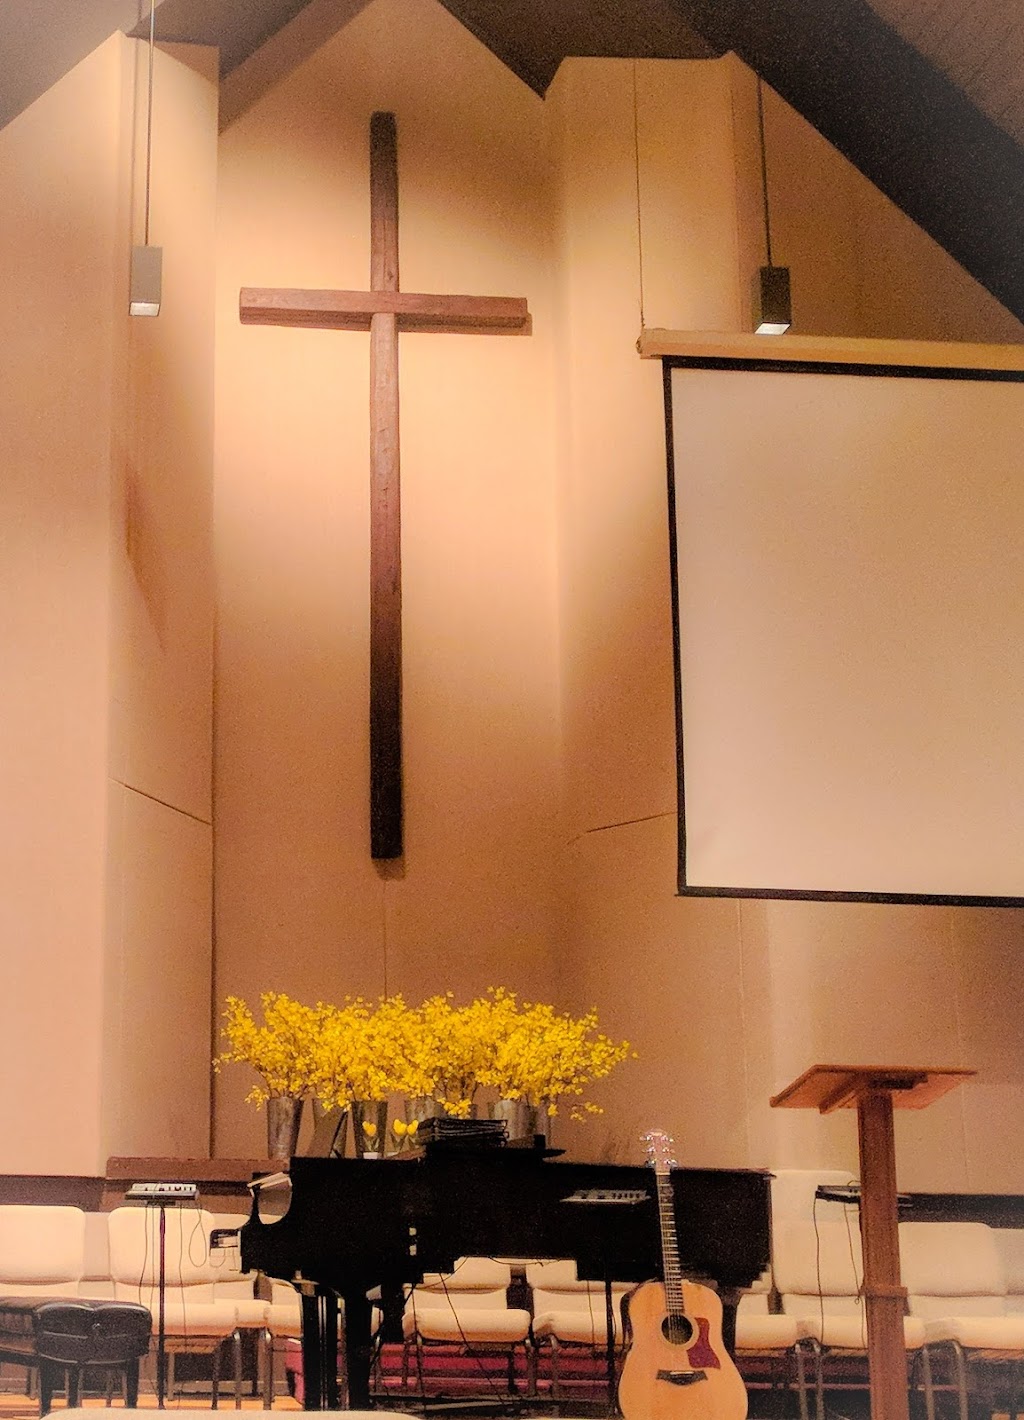 Trinity Evangelical Free Church | 33 Center Rd, Woodbridge, CT 06525 | Phone: (203) 387-4711